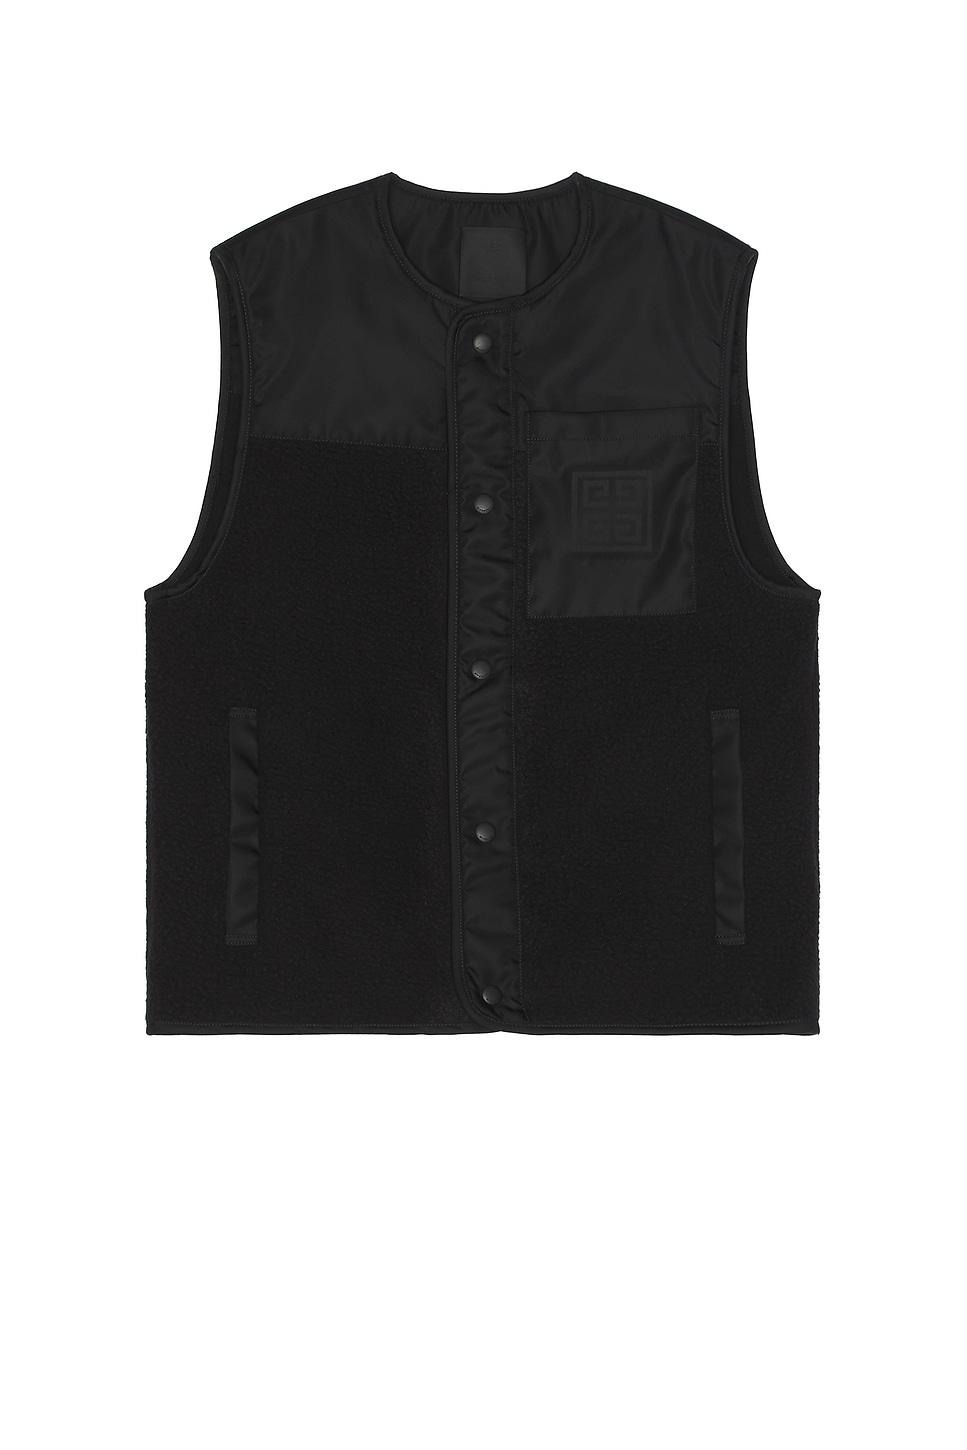 Givenchy Mix Material 4g Pocket Vest In Black